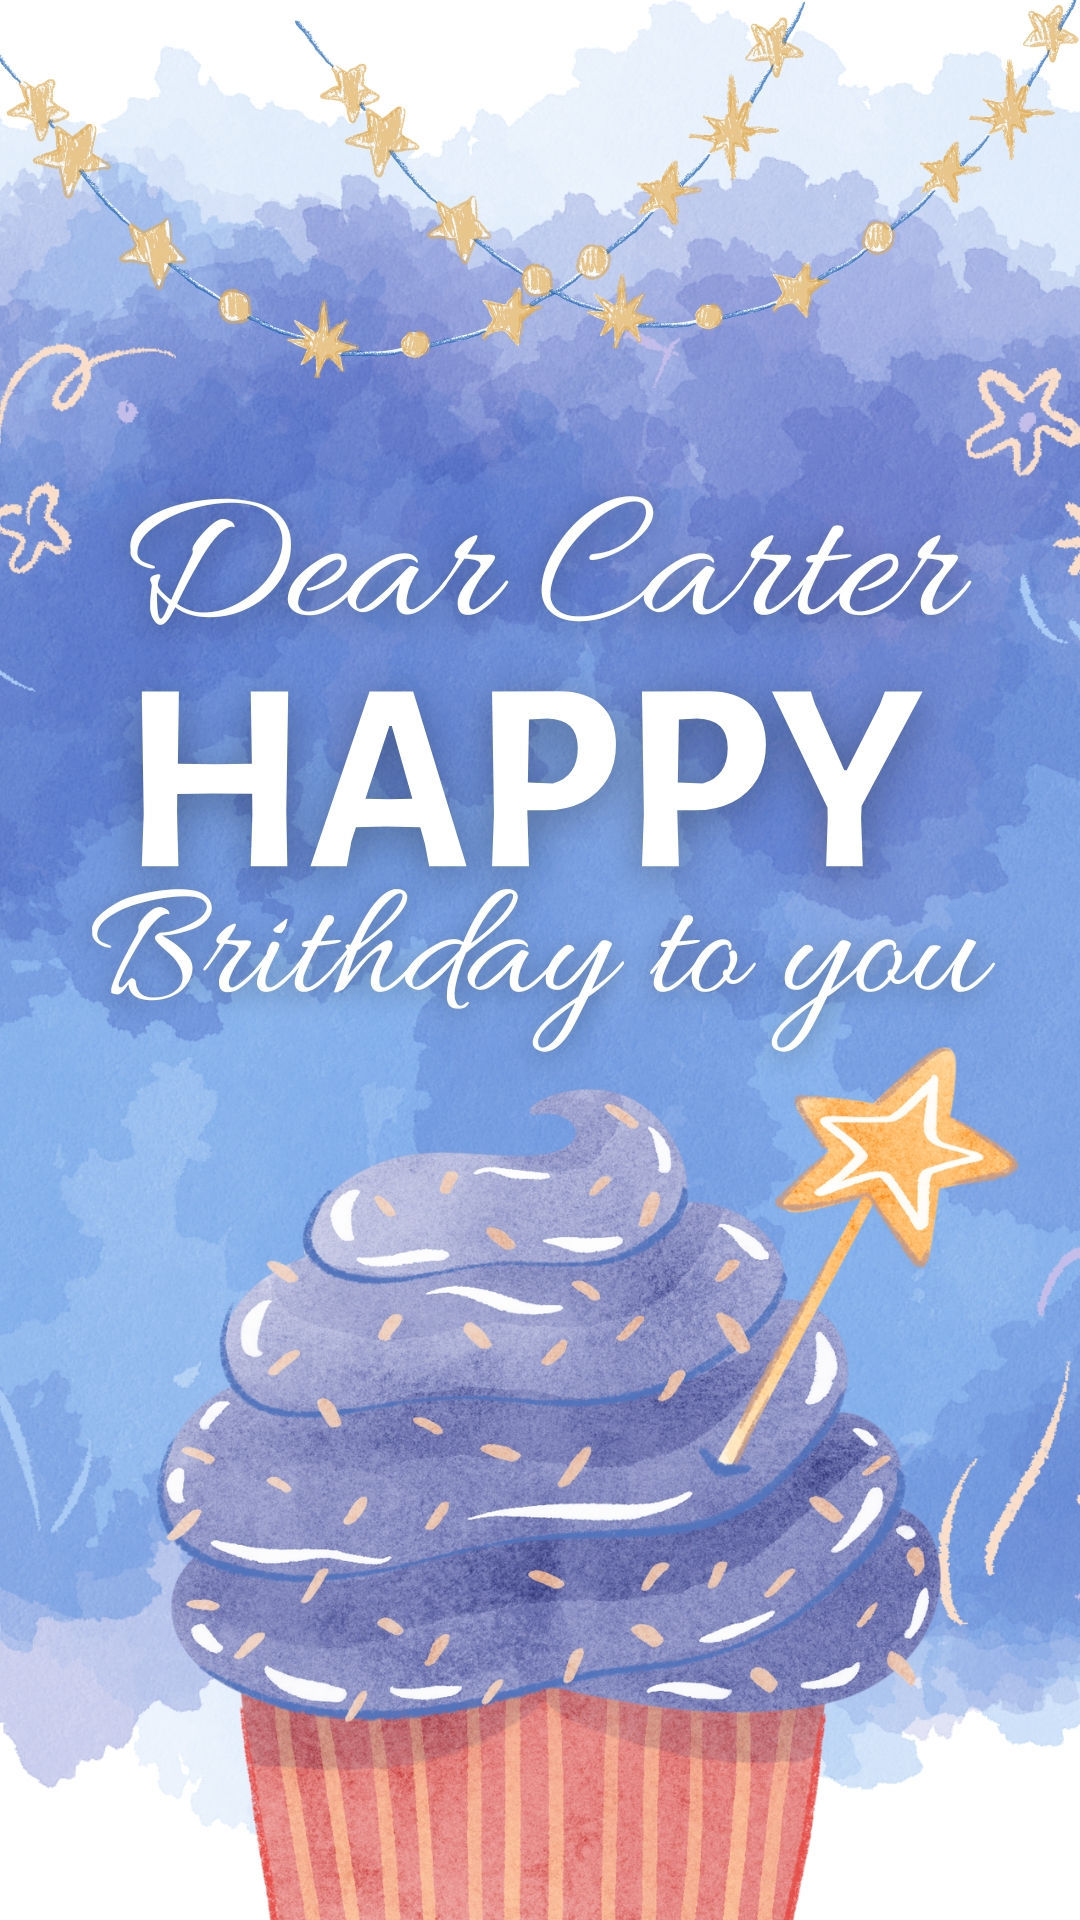 Happy Birthday Carter